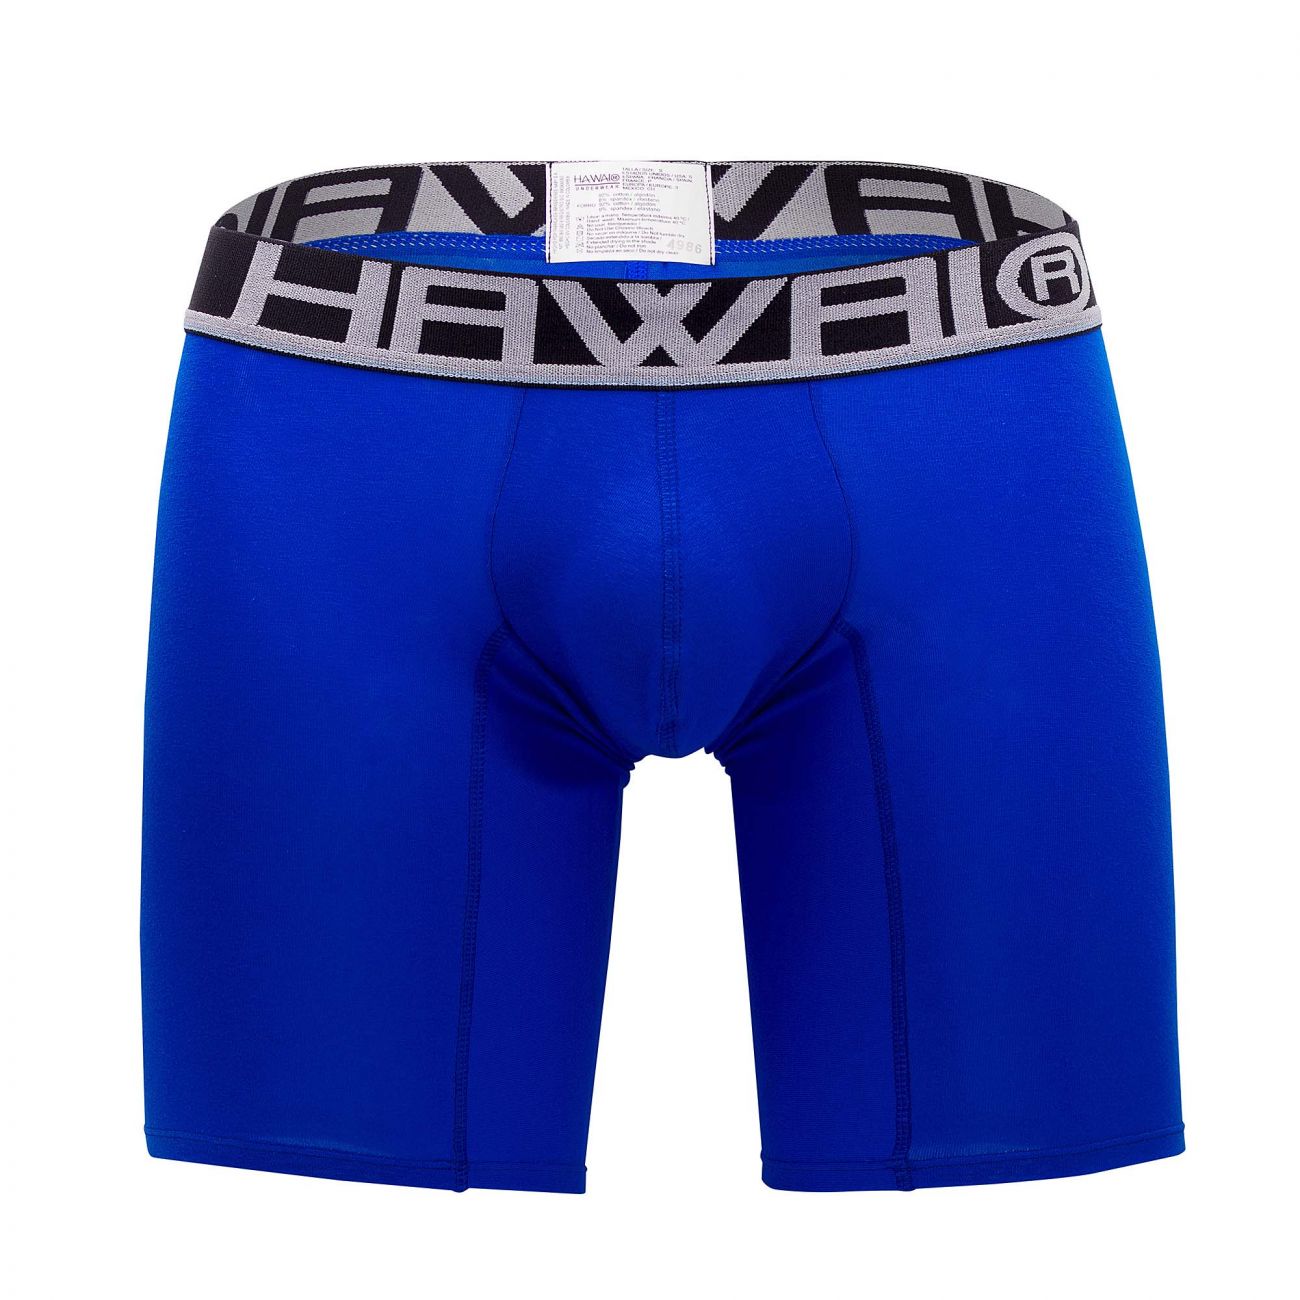 HAWAI 41903 Solid Athletic Boxer Briefs Royal Blue